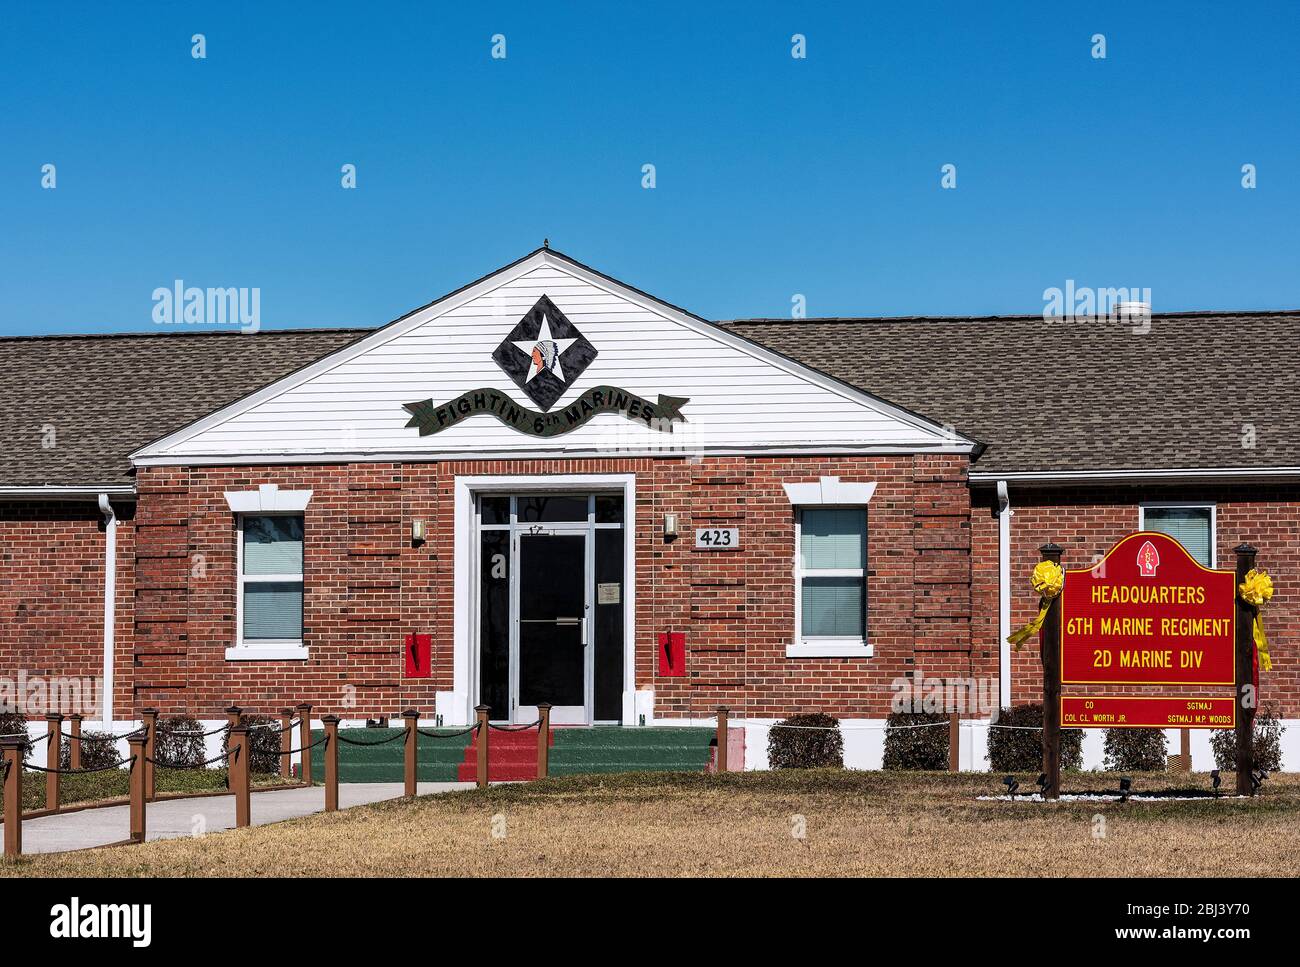 Marine Corps Base Camp Lejeune in North Carolina. Stock Photo